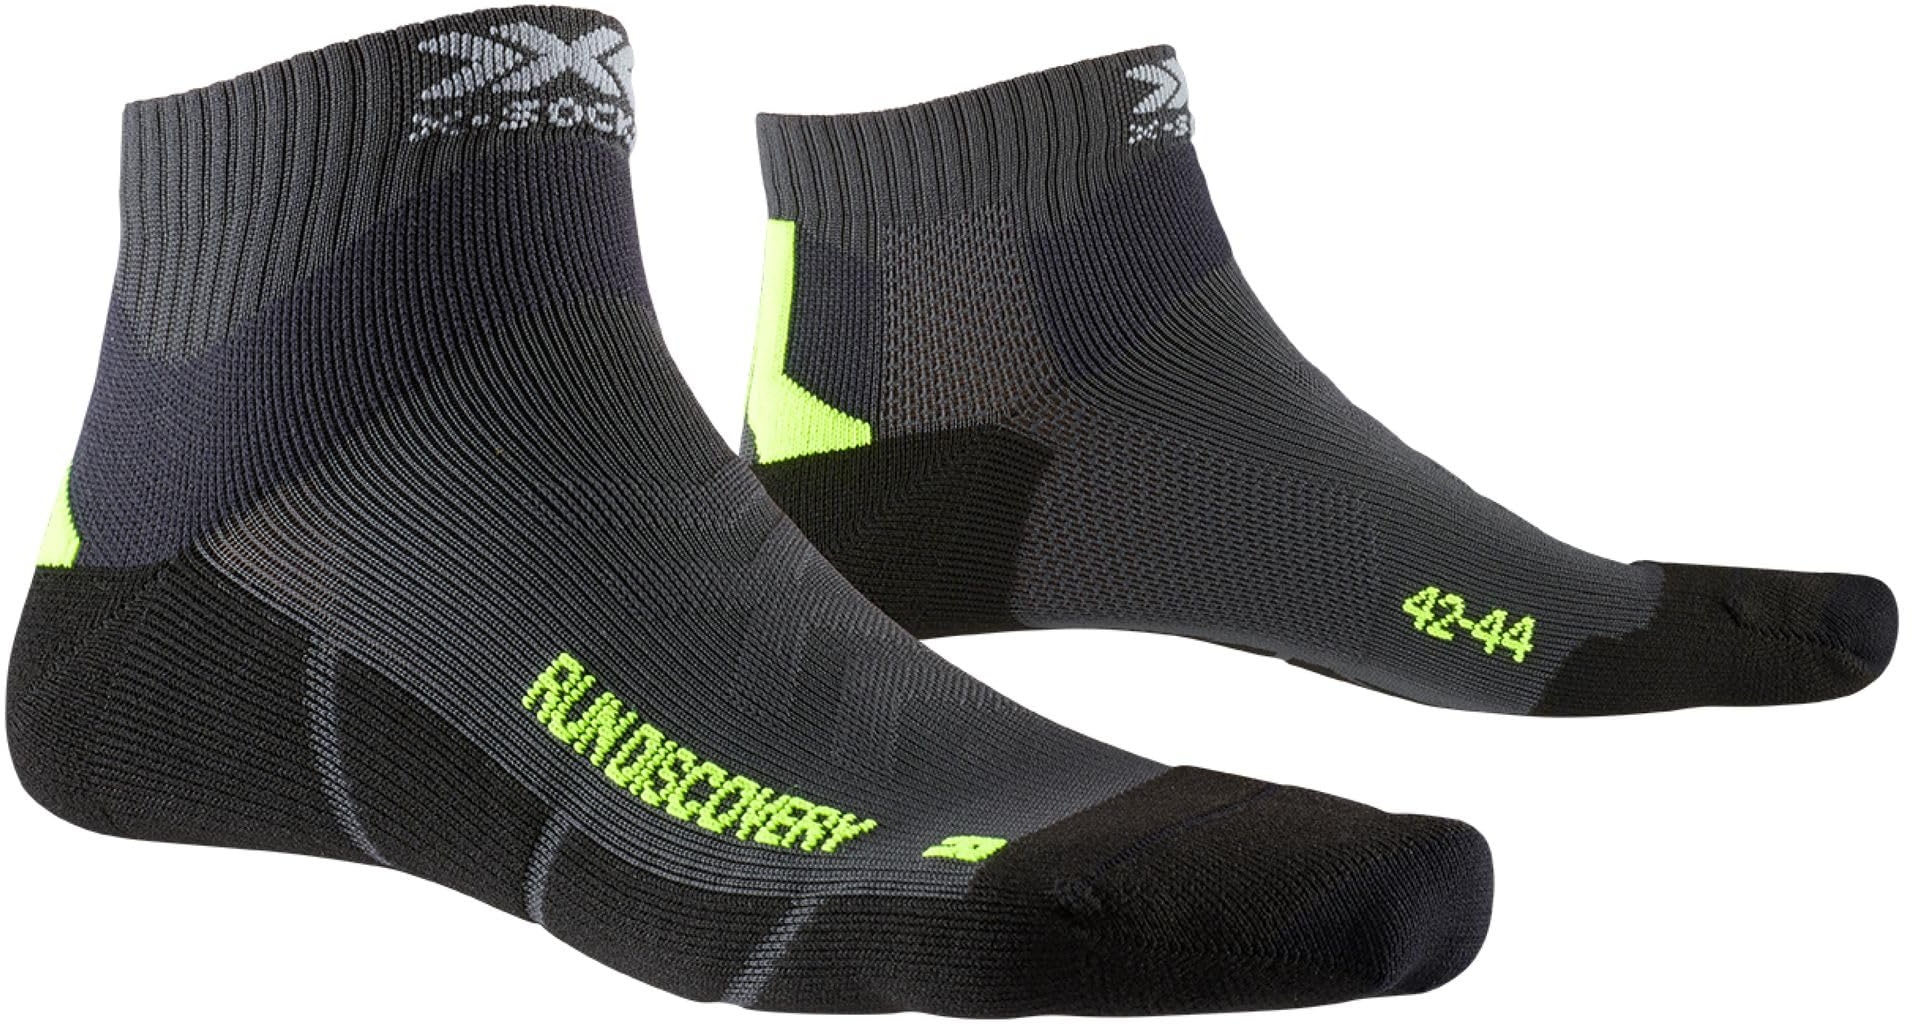 X-Socks Unisex – Adult Socken Strümpfe RUN DISCOVERY laufsocken sportsocken herren damen, charcoal/phyton yellow/black, 35/38, XS-RS18S20U